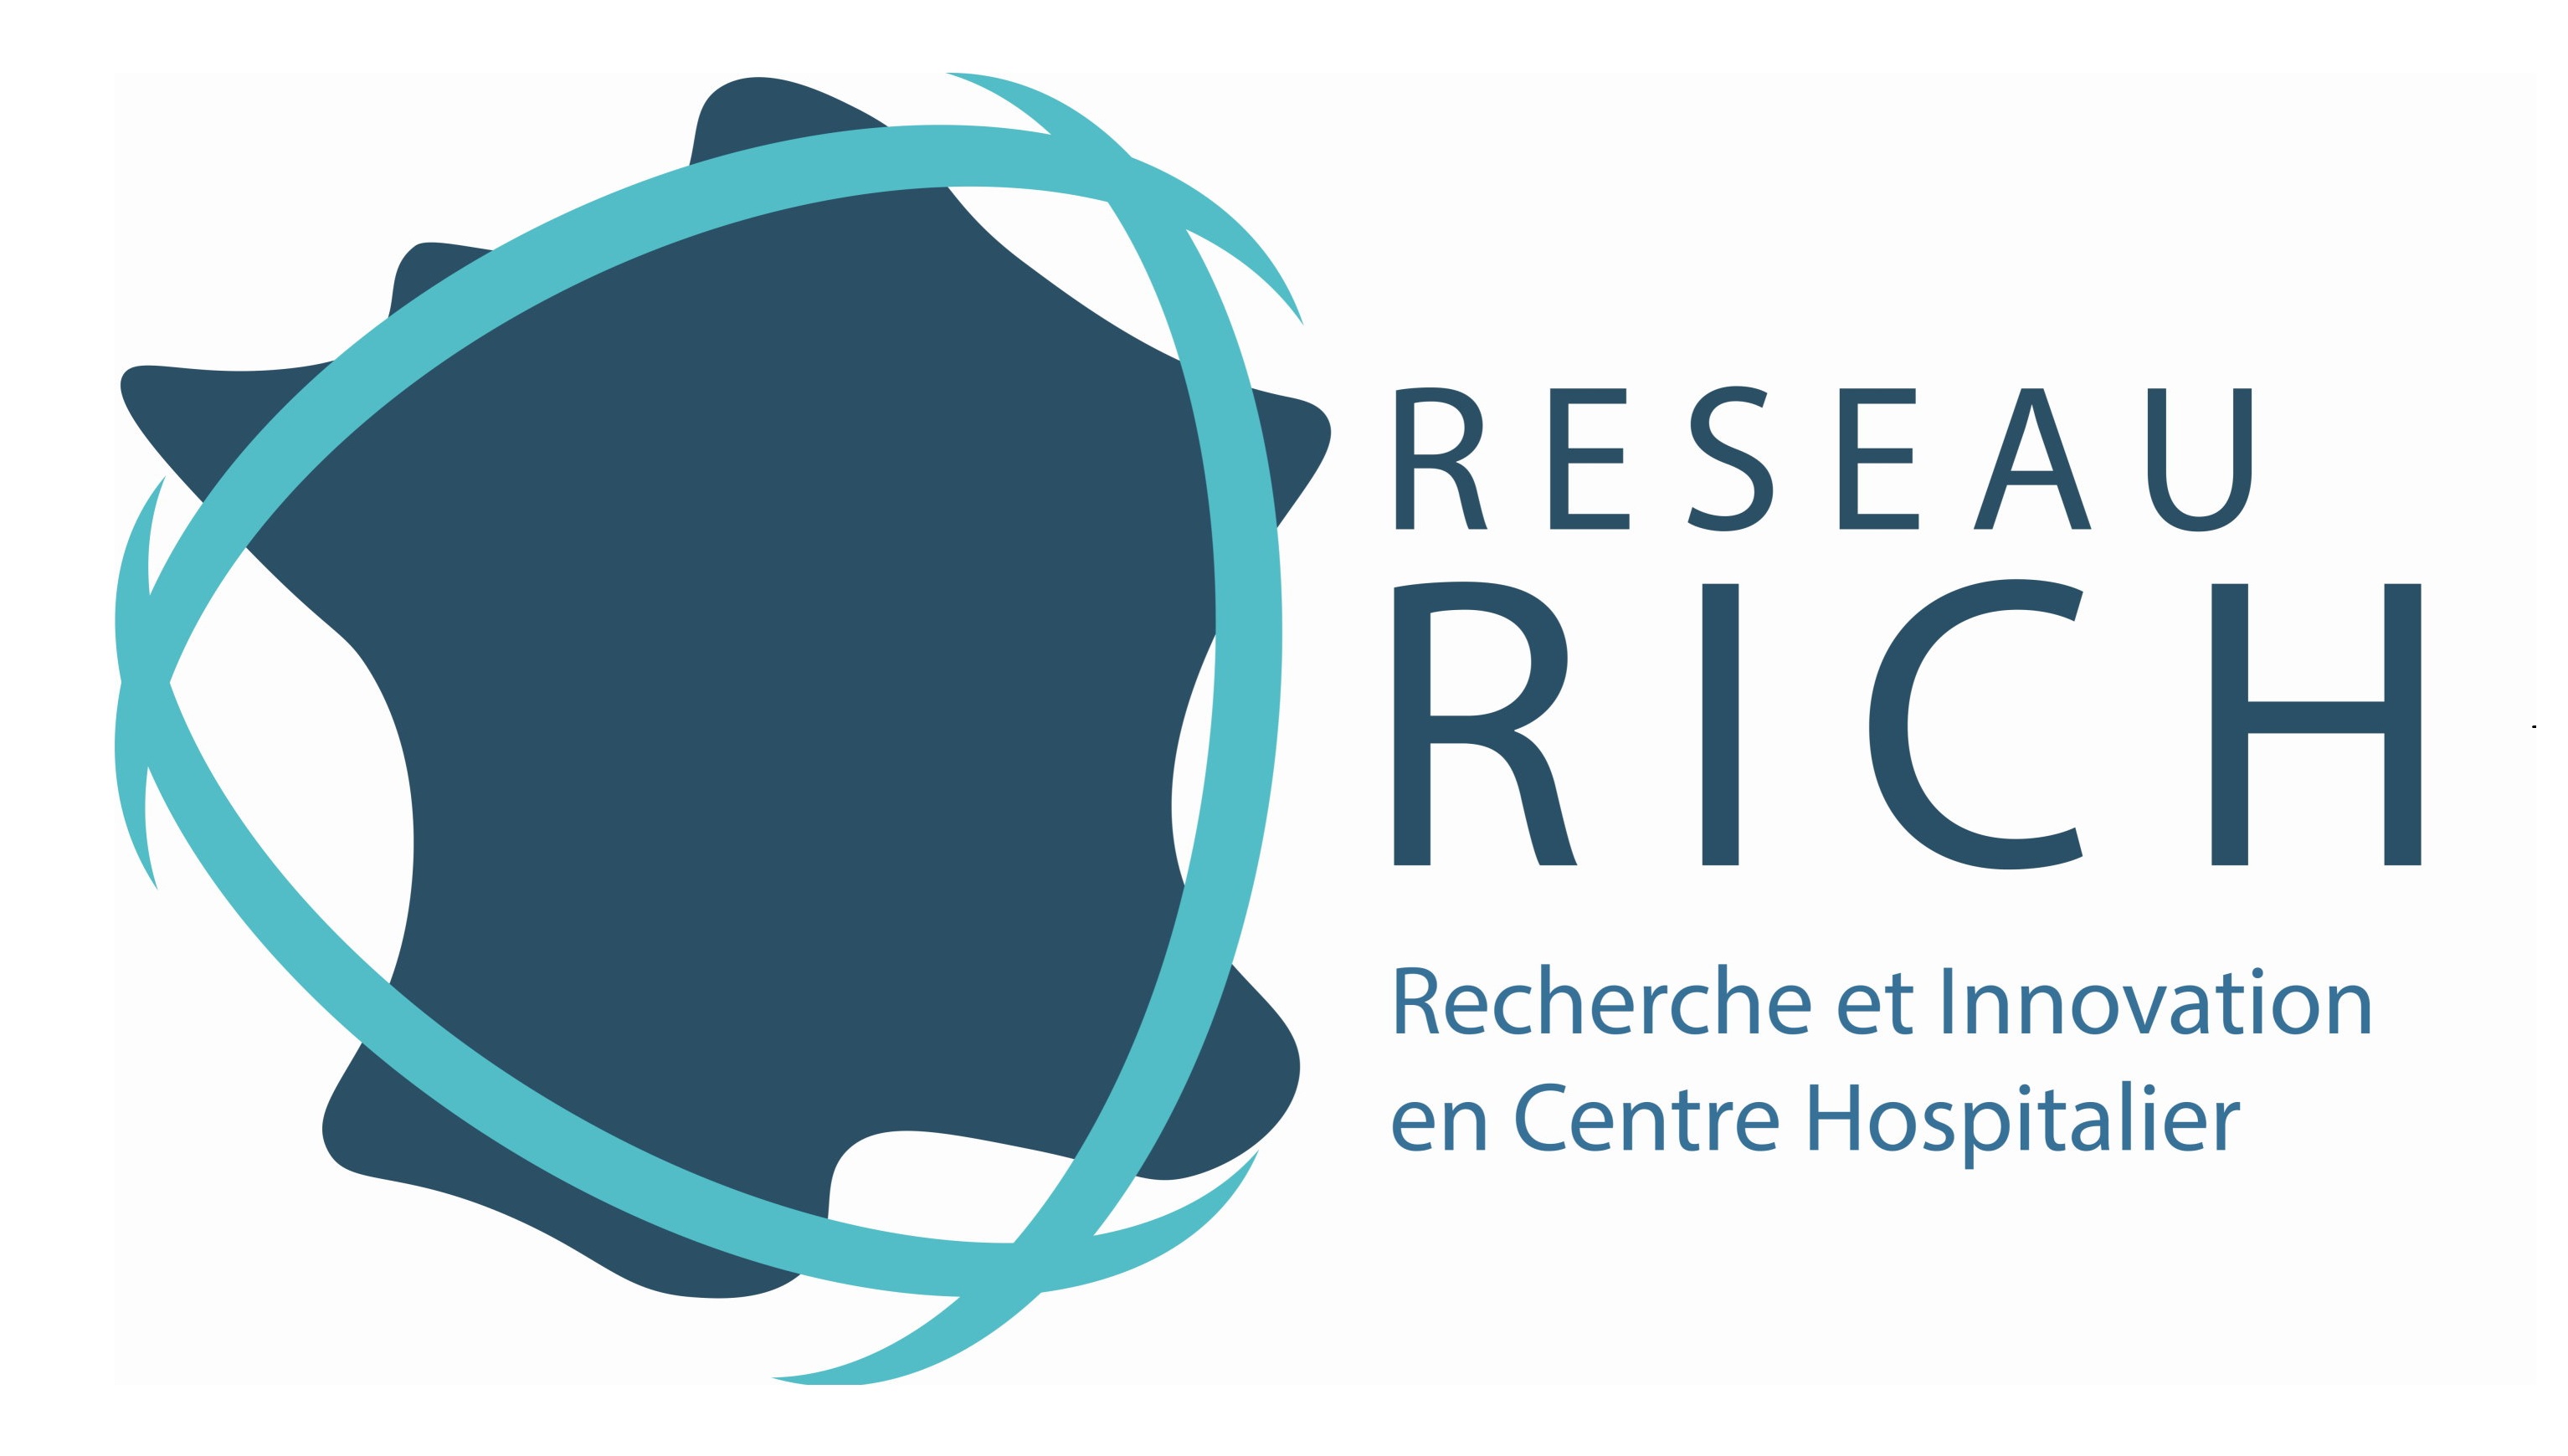 Recherche et Innovation en Centre Hospitalier